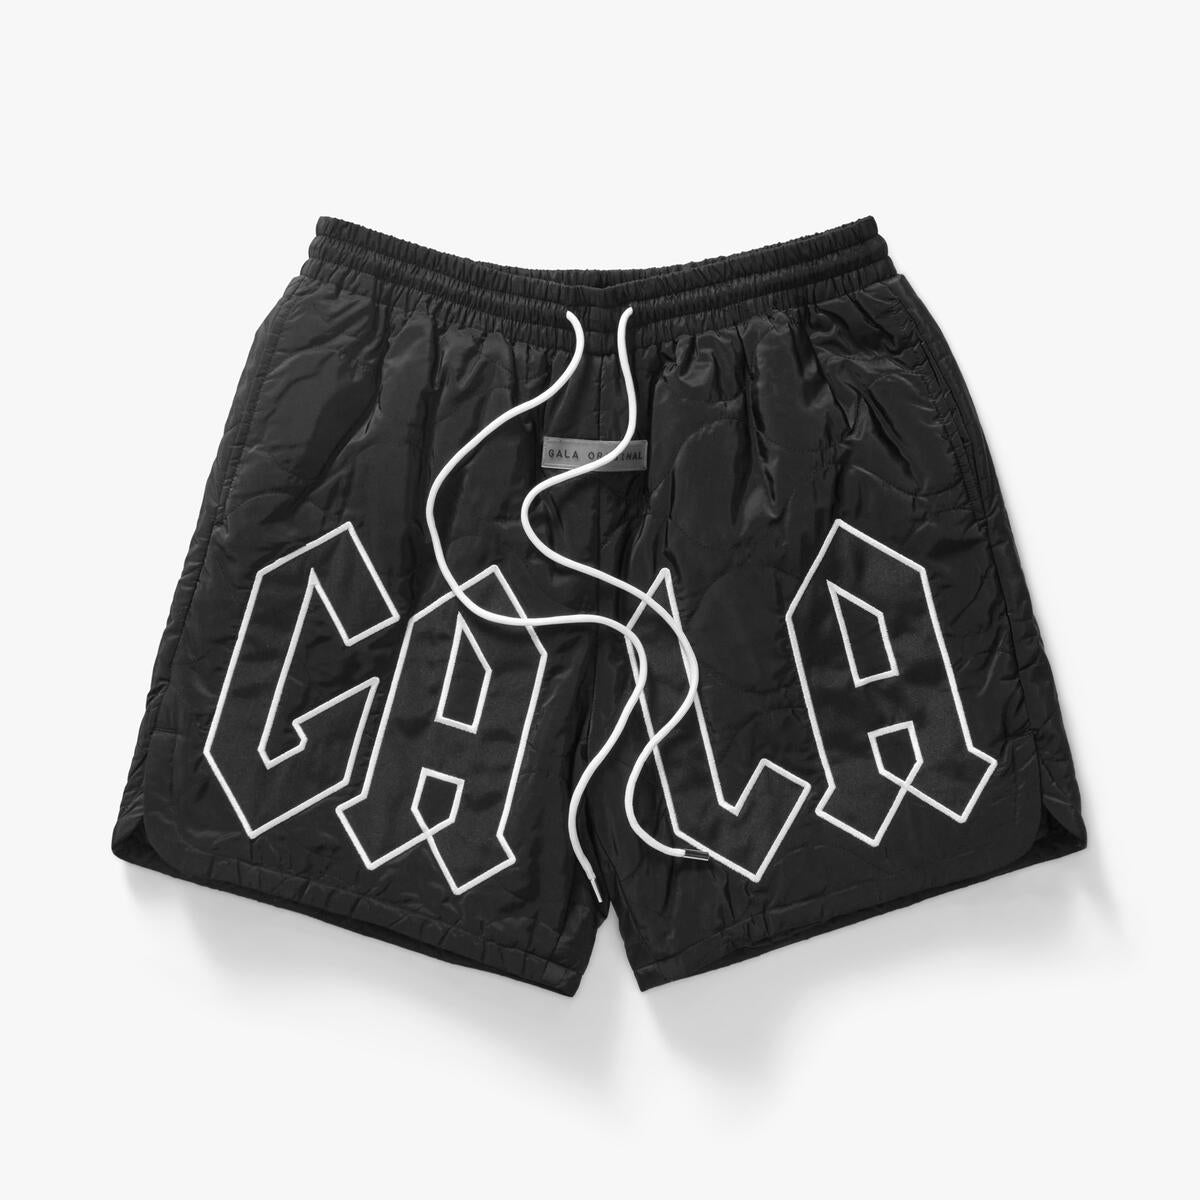 Gala Original “London” Shorts (Black)